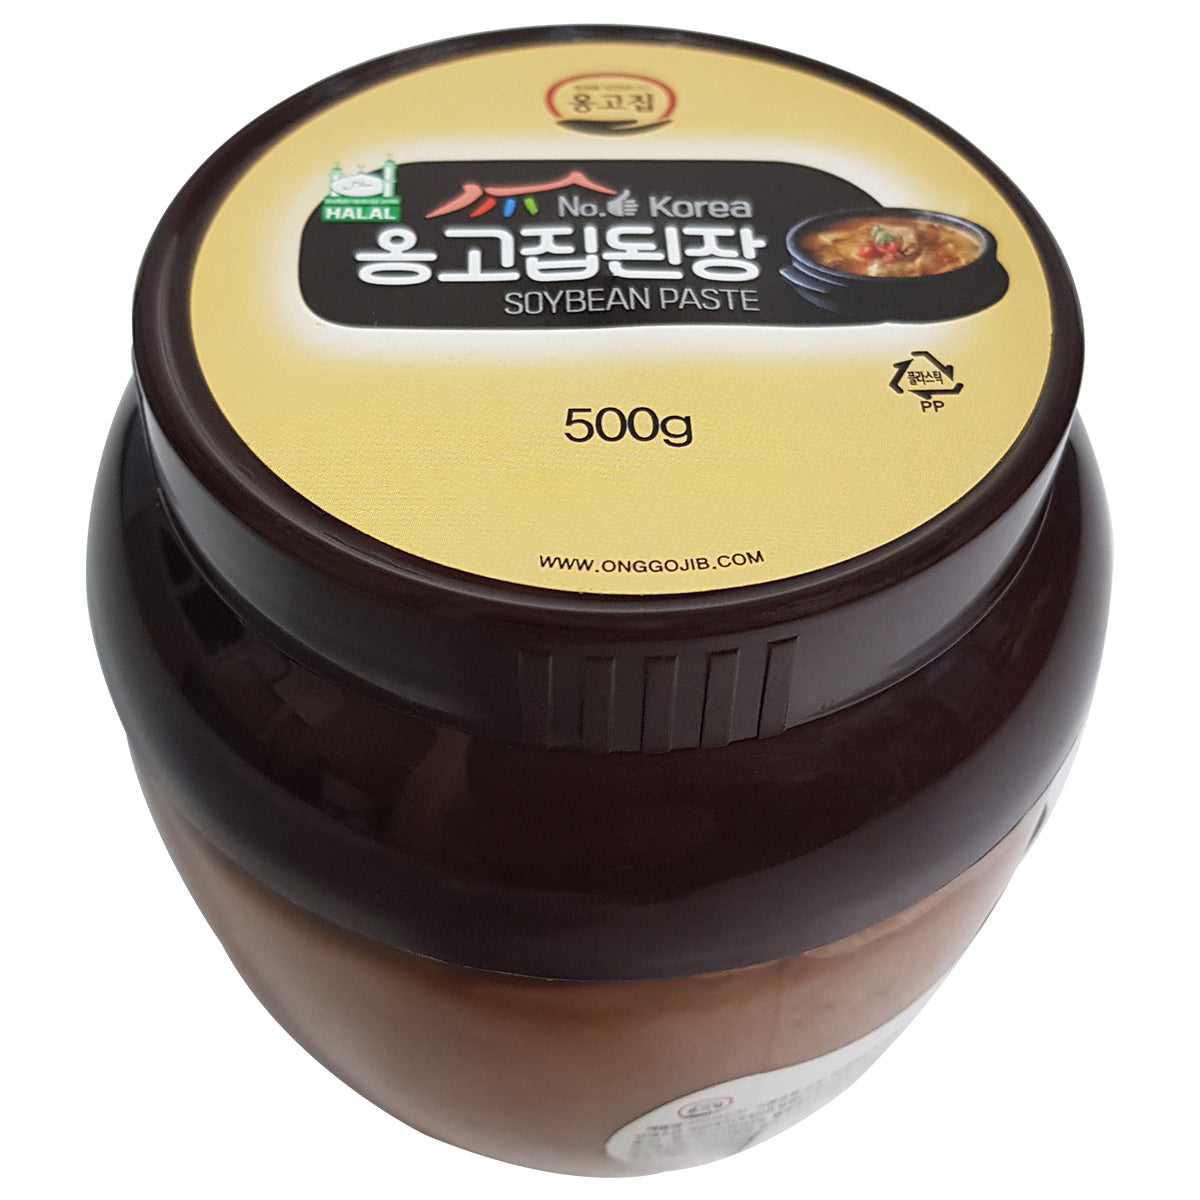 KF Village traditional soybean paste 500g 재래식 제조 옹고집 된장